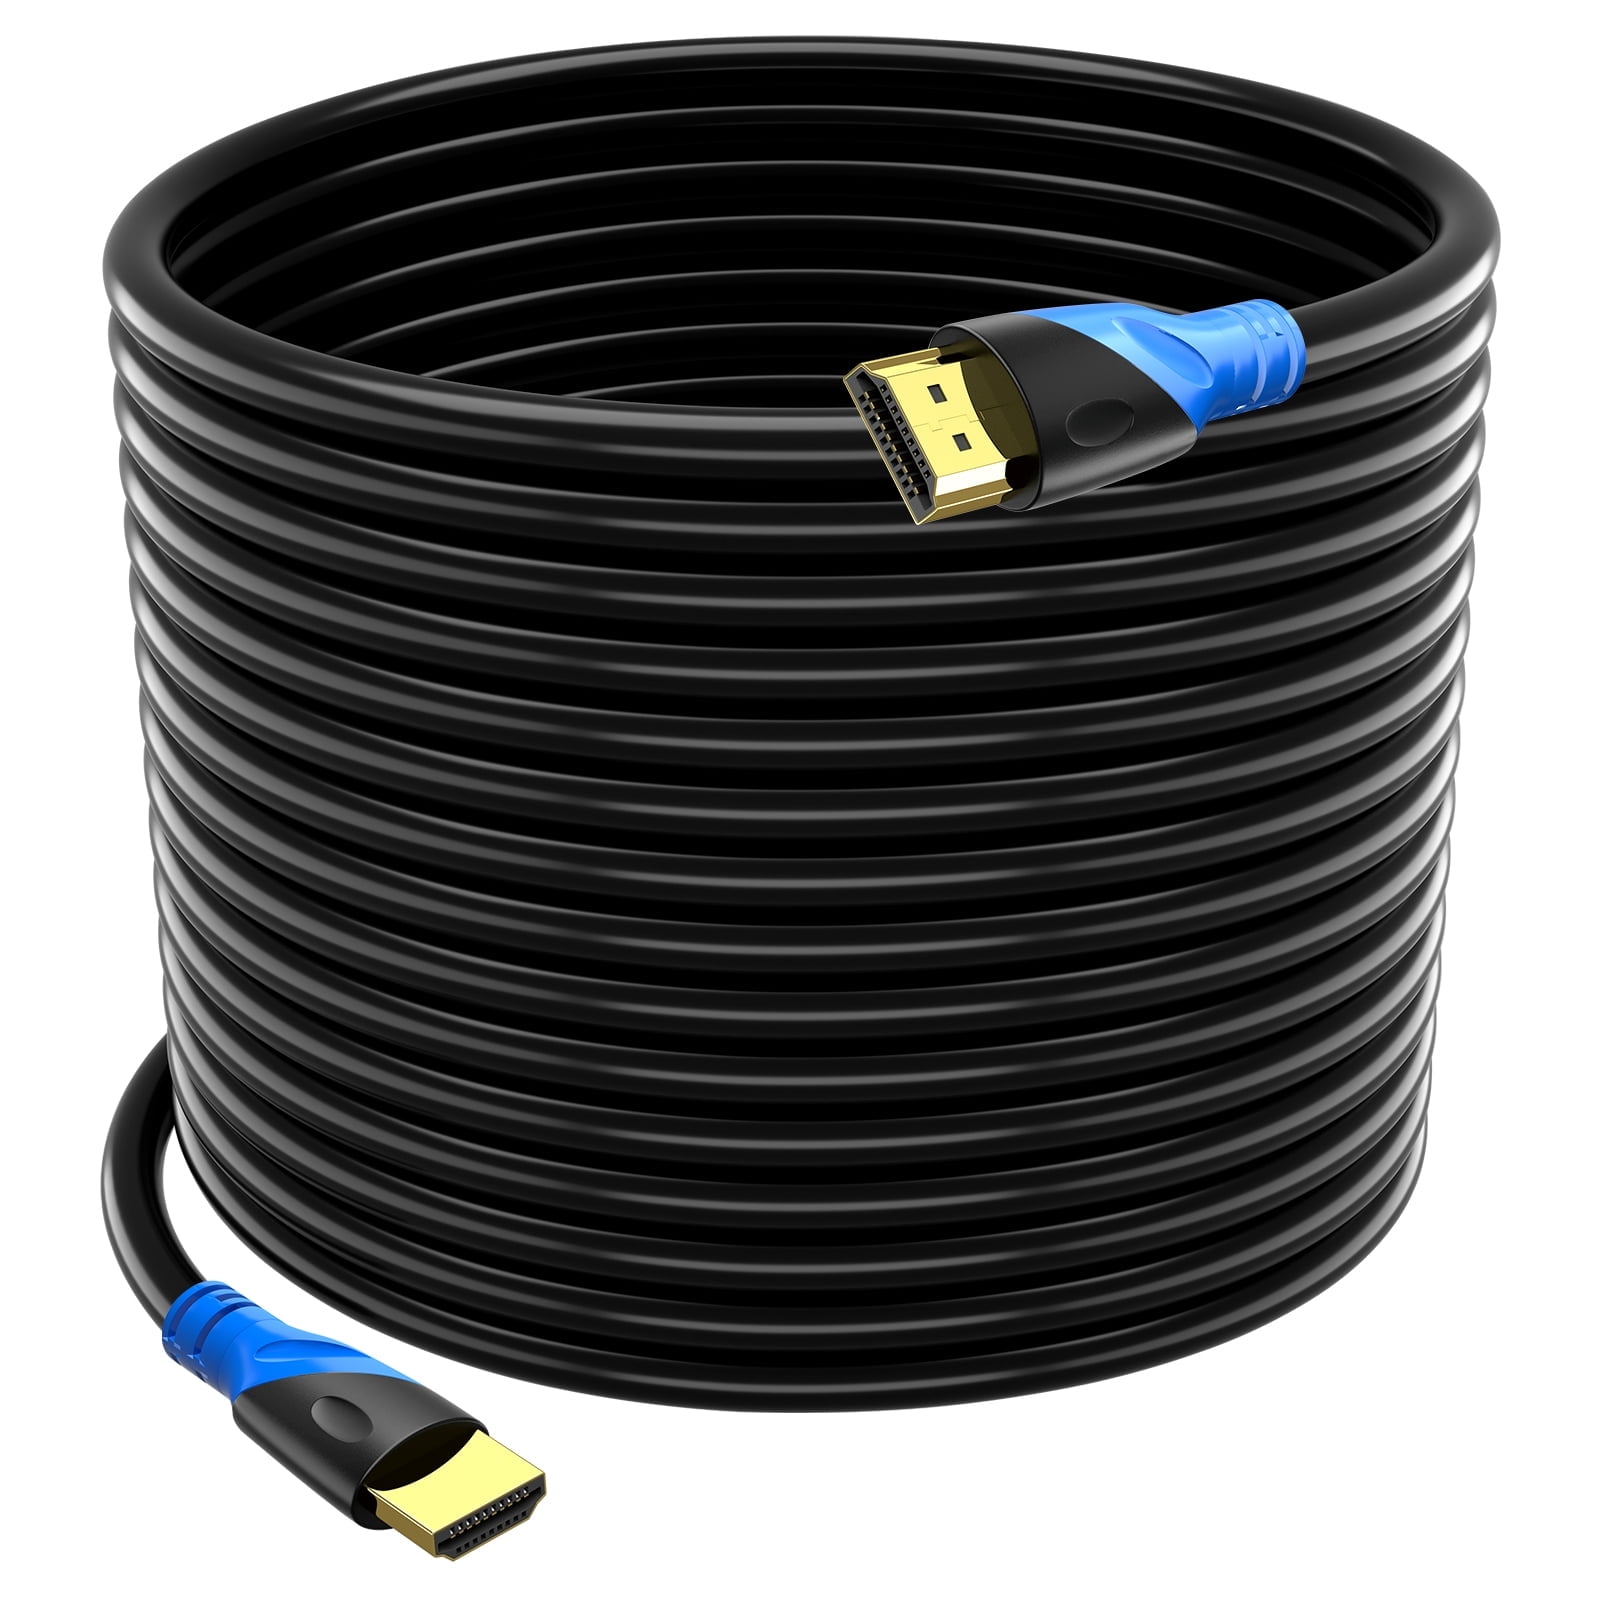 Cables Hdmi 4k 2 Metros Pc Led Smart Ps3 Monitor Noga 2m